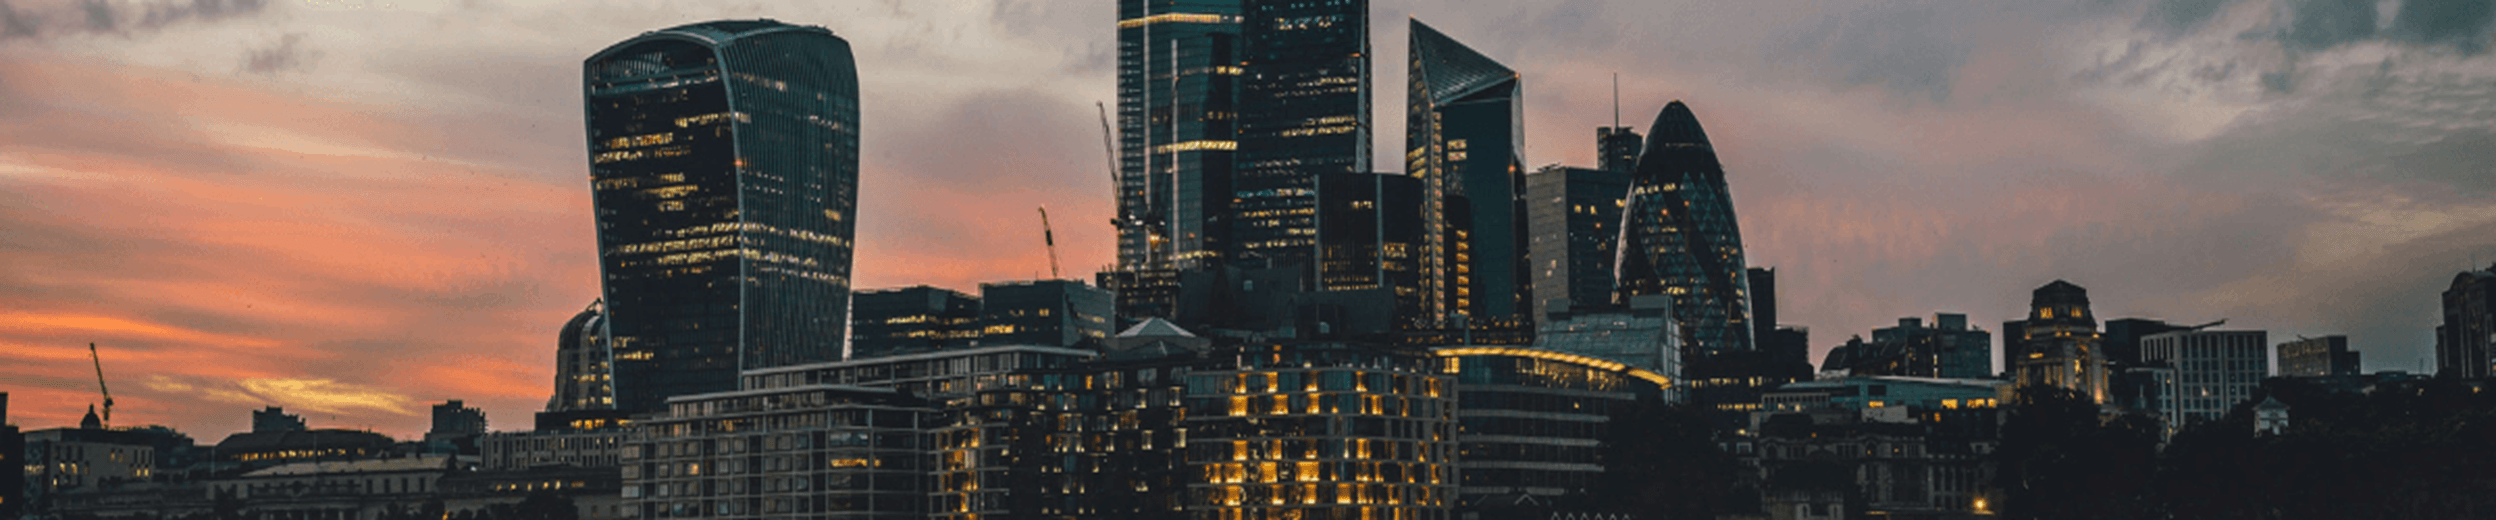 London skyline during sunset